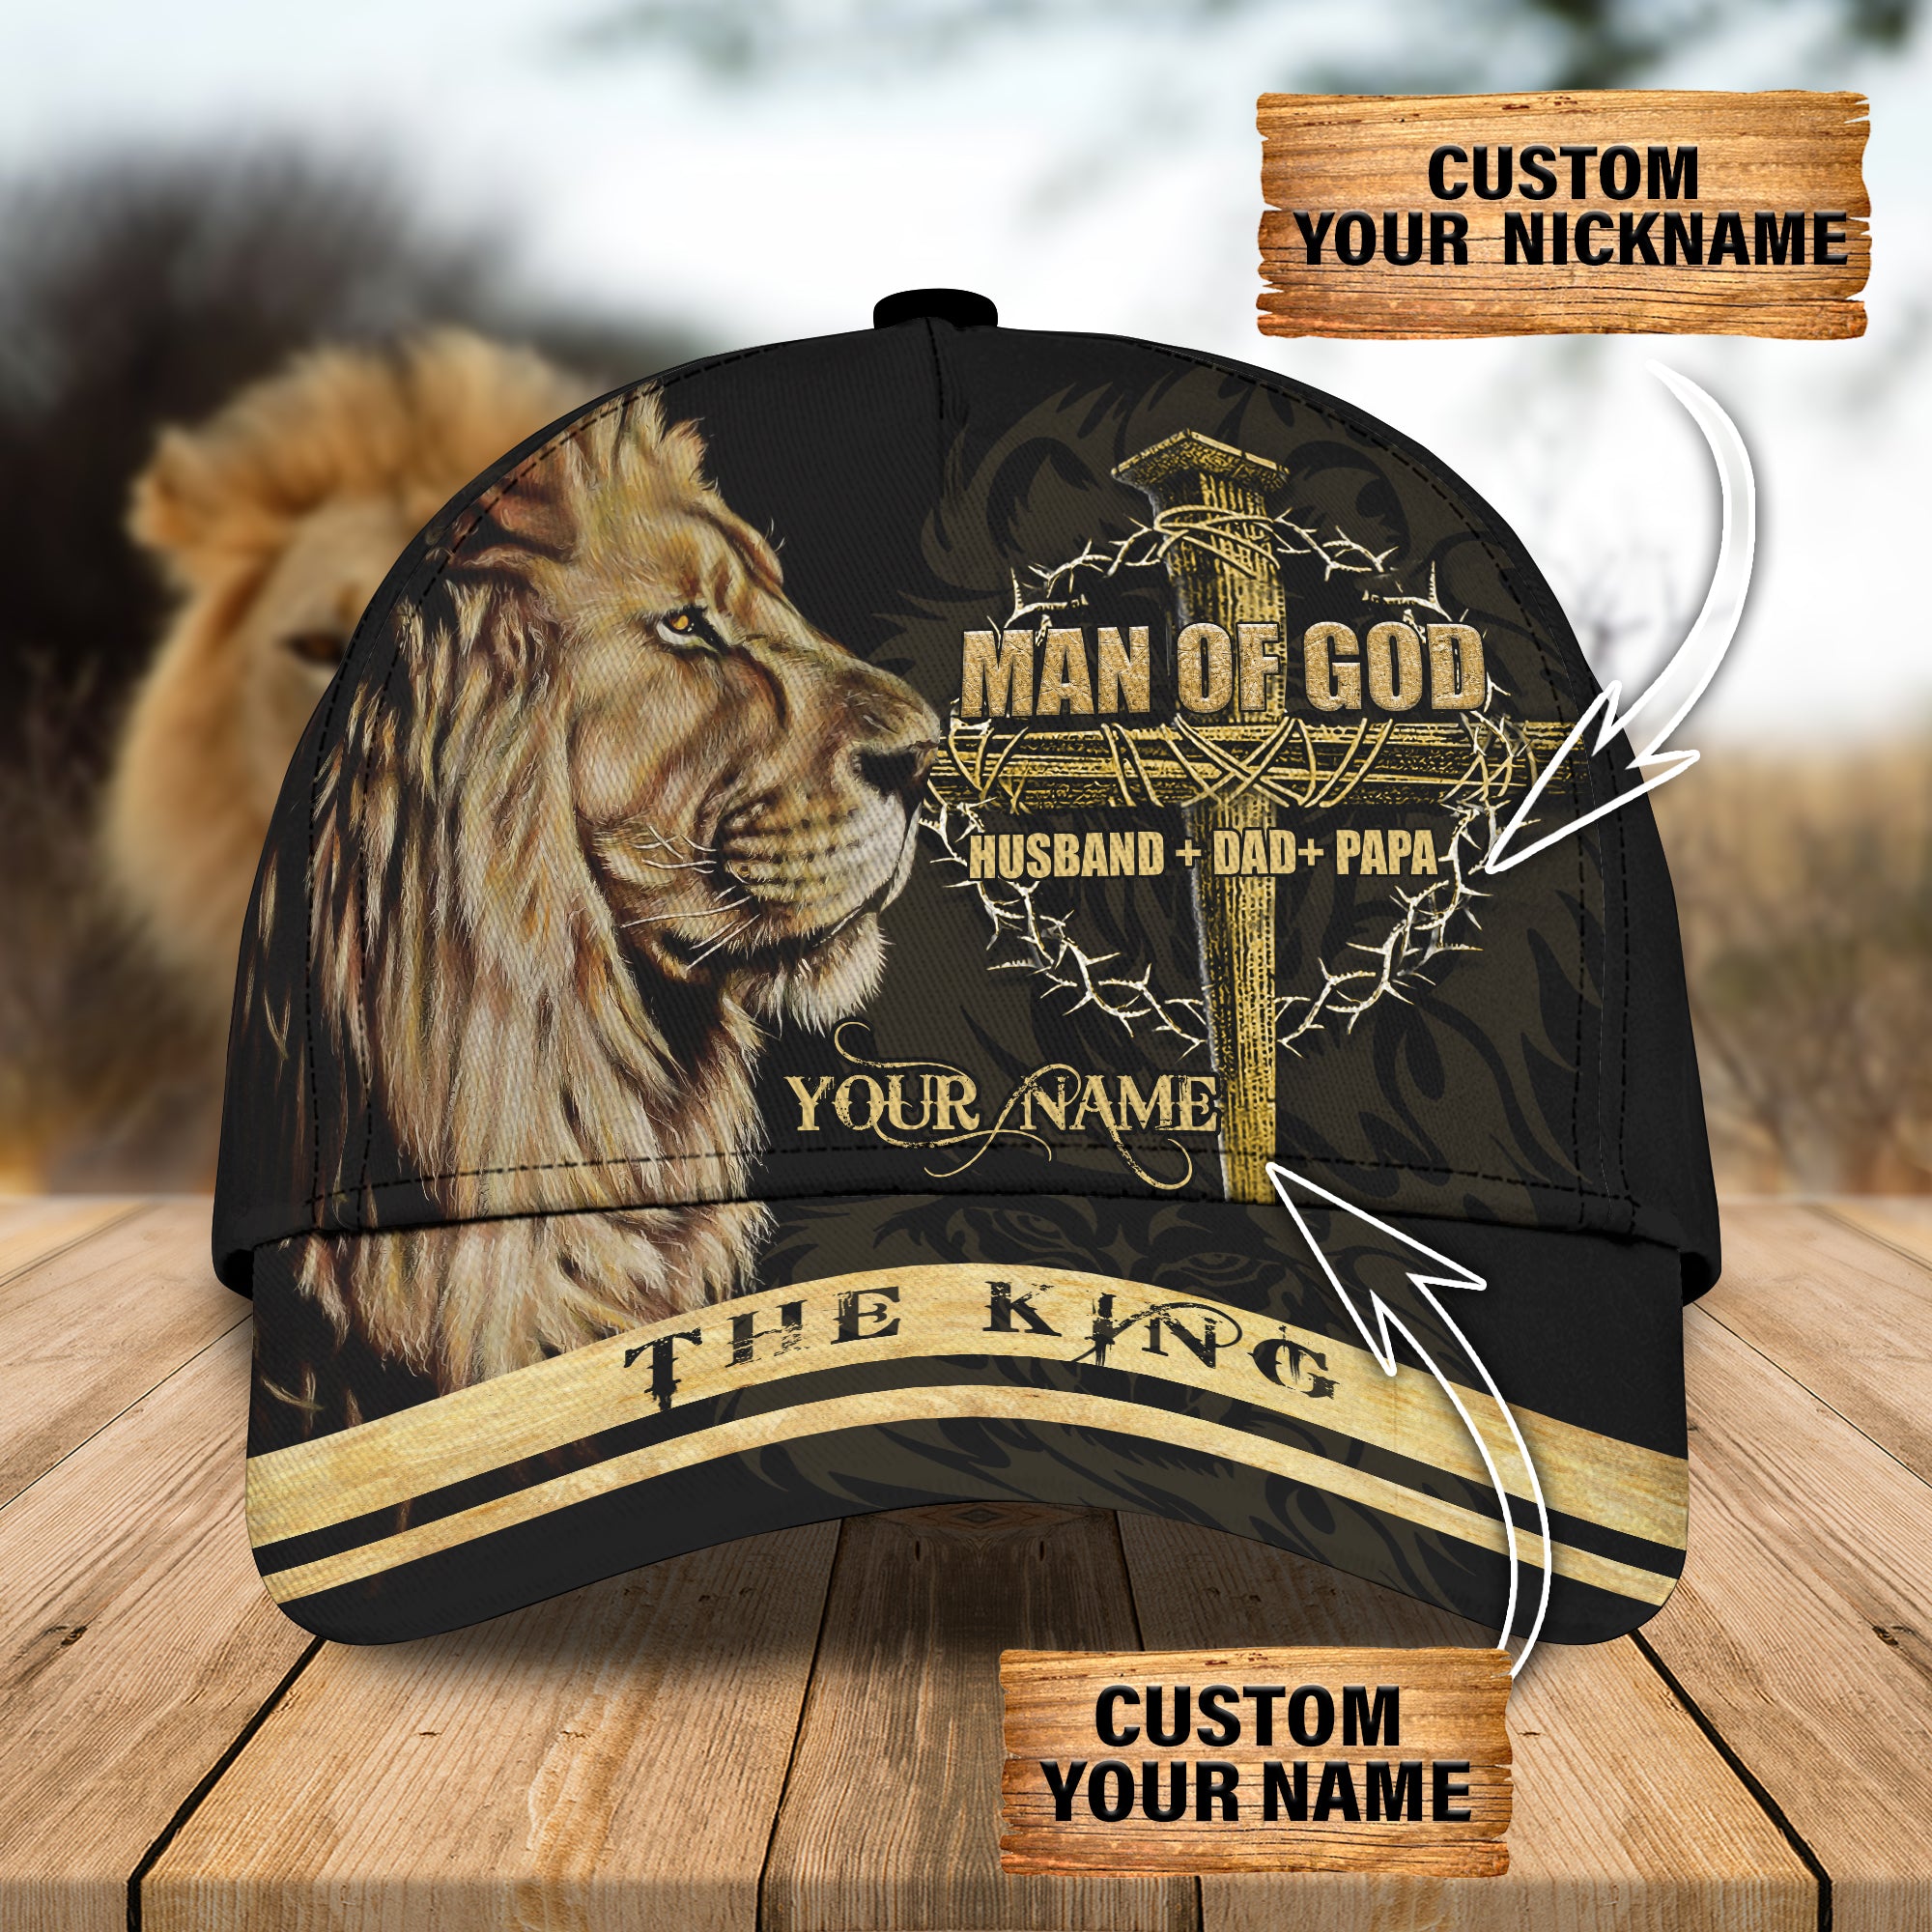 Man Of God - Personalized Name Cap 17 - Bhn97 1